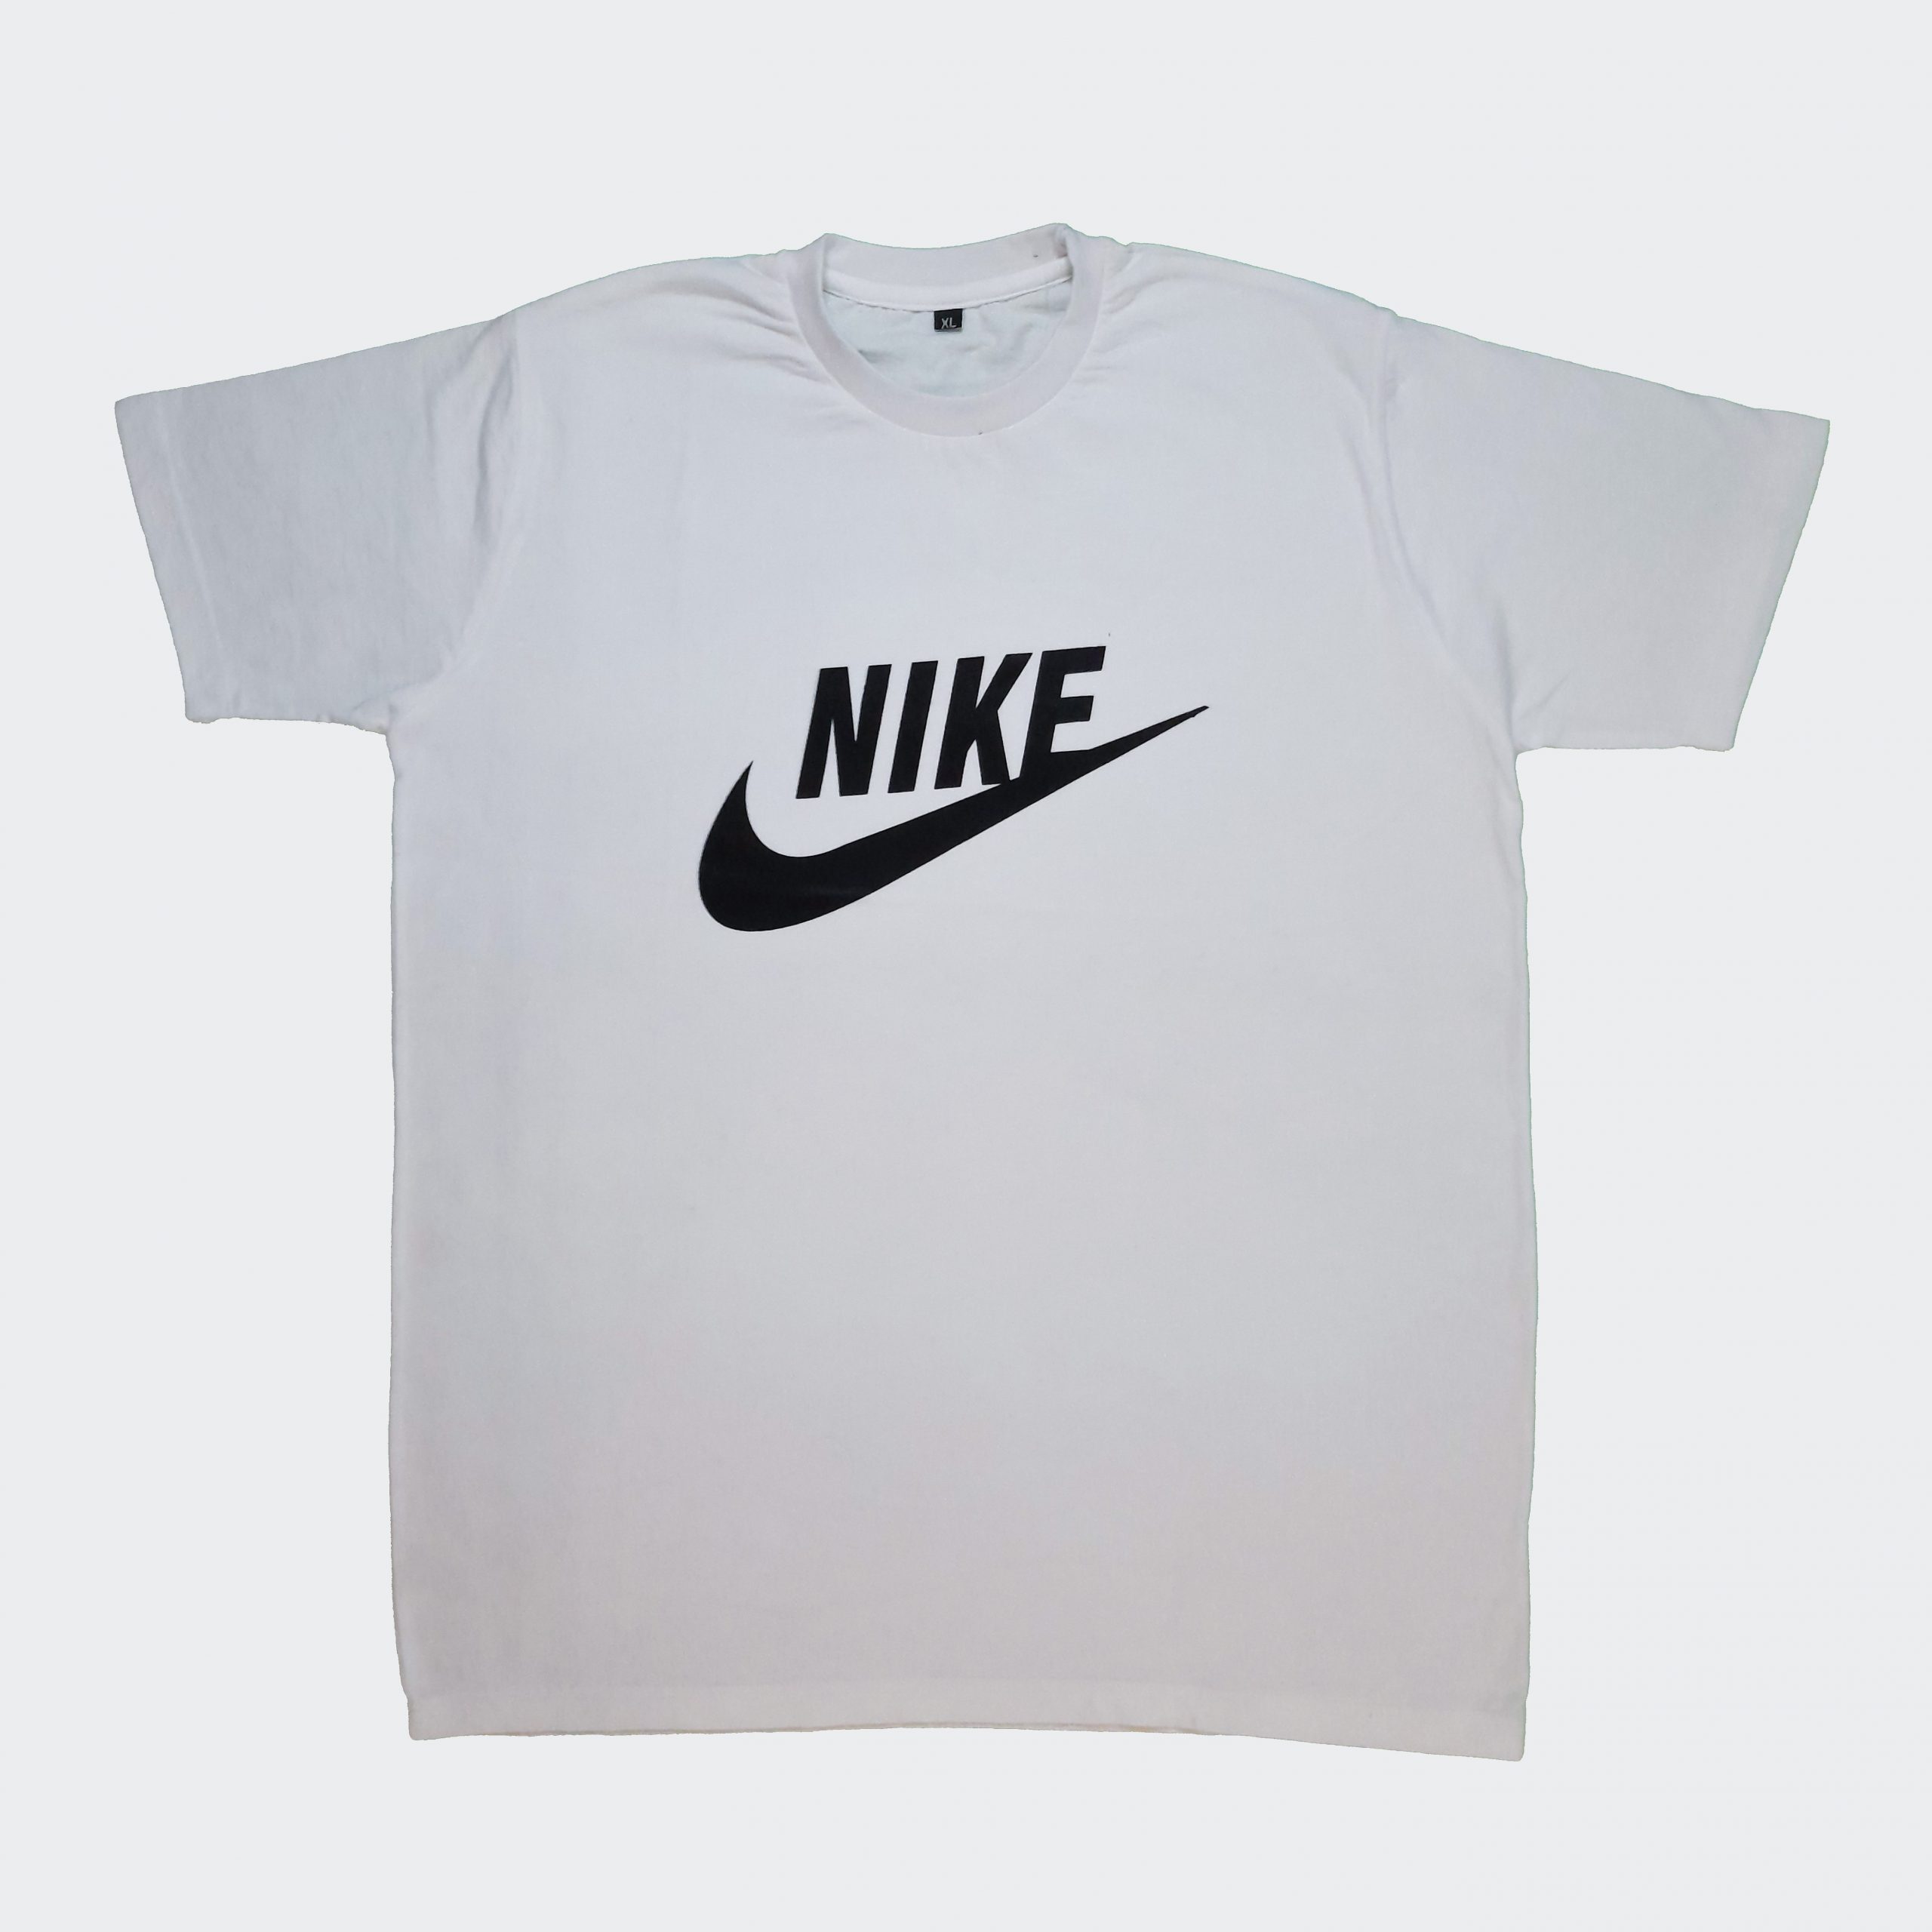 Nike Logo Tee White - Winci